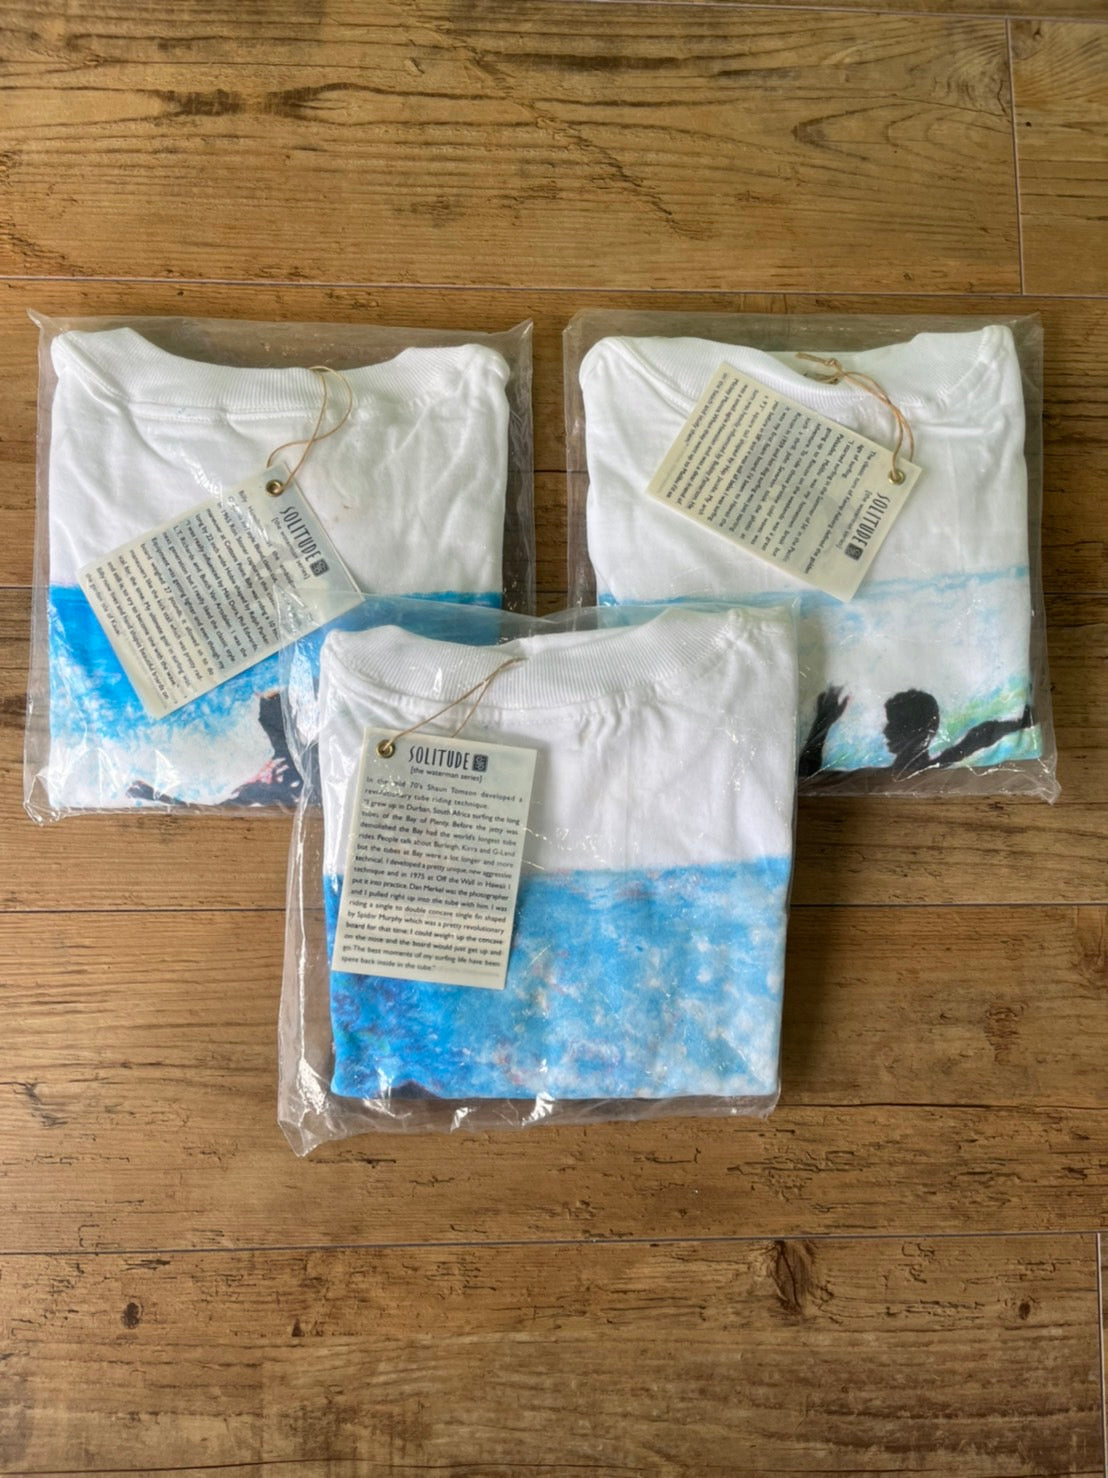 【Solitude】00's Y2K surf the waterman series Kemp Aaberg T-shirt （men's L)